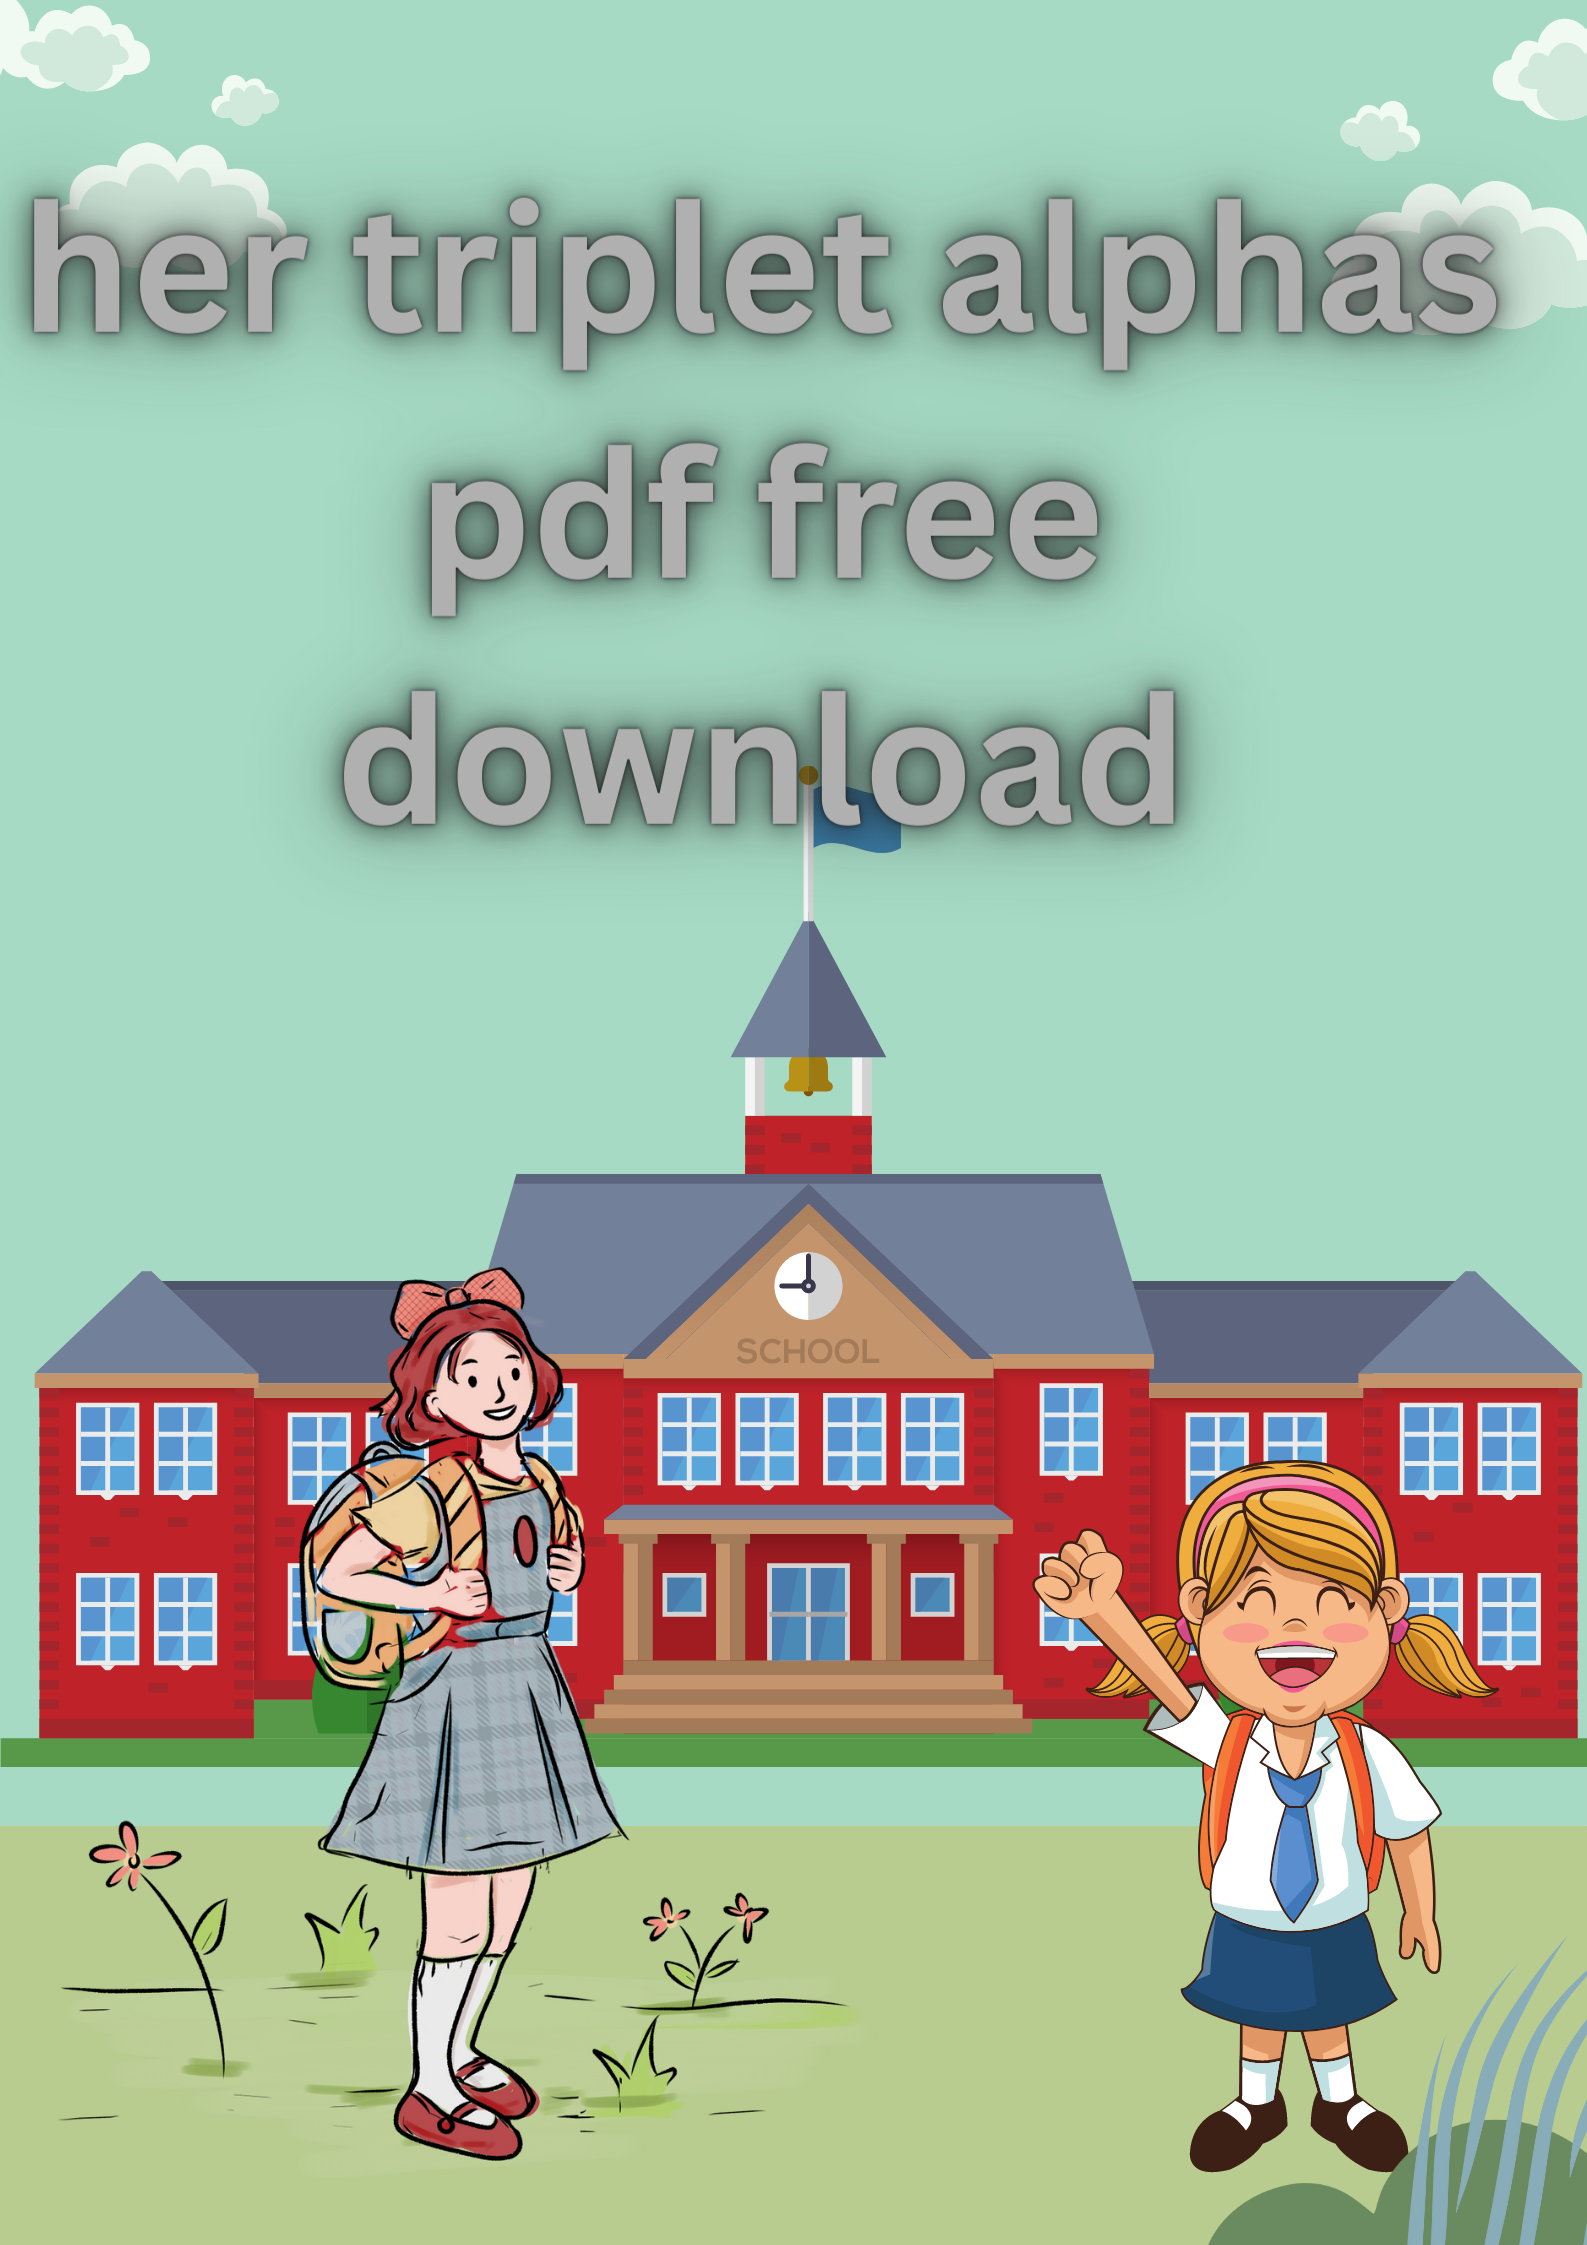 her triplet alphas pdf free download